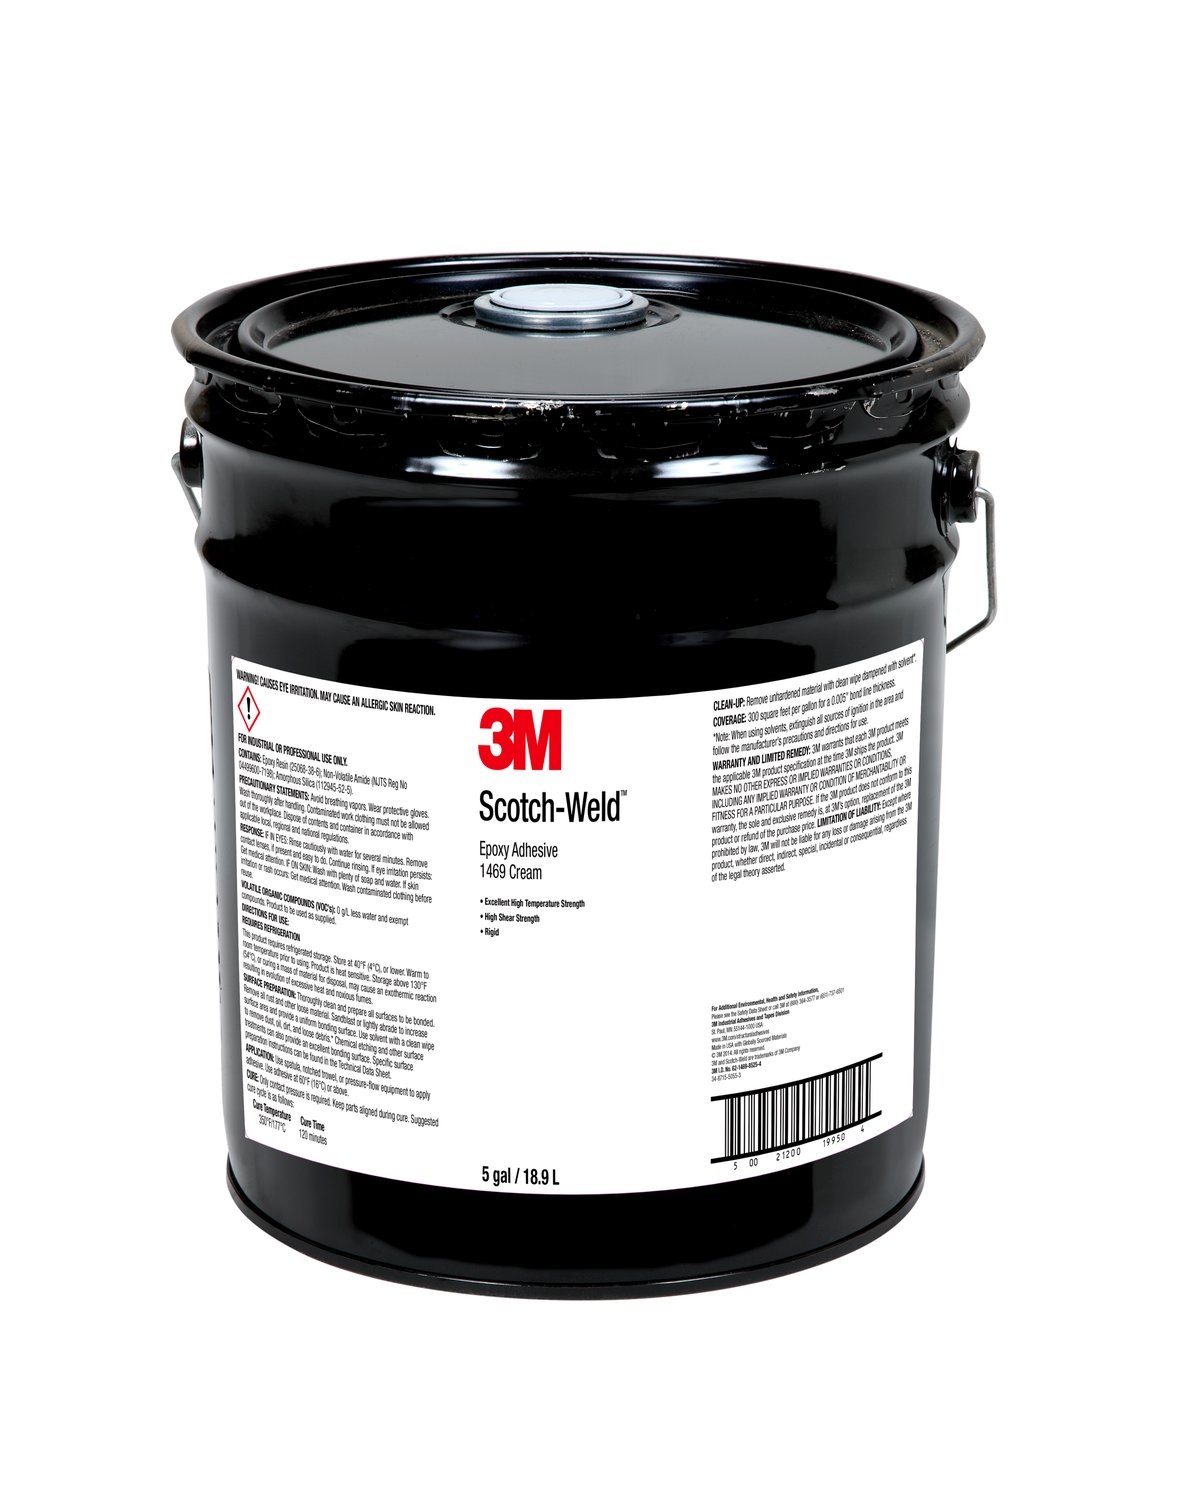 7100056050 - 3M Scotch-Weld Epoxy Adhesive 1469, Cream, 5 Gallon (Pail), Drum